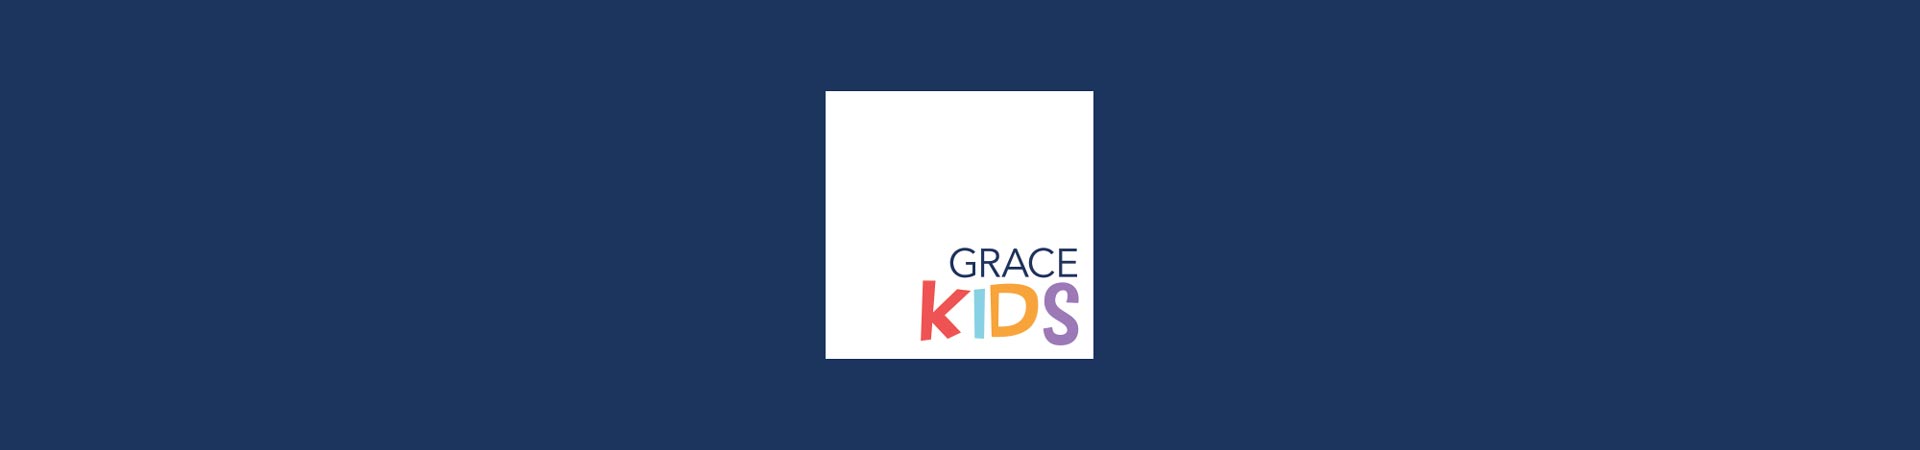 Grace Kids Preschool Ministry - Birth through Pre-K - Grace Community Church